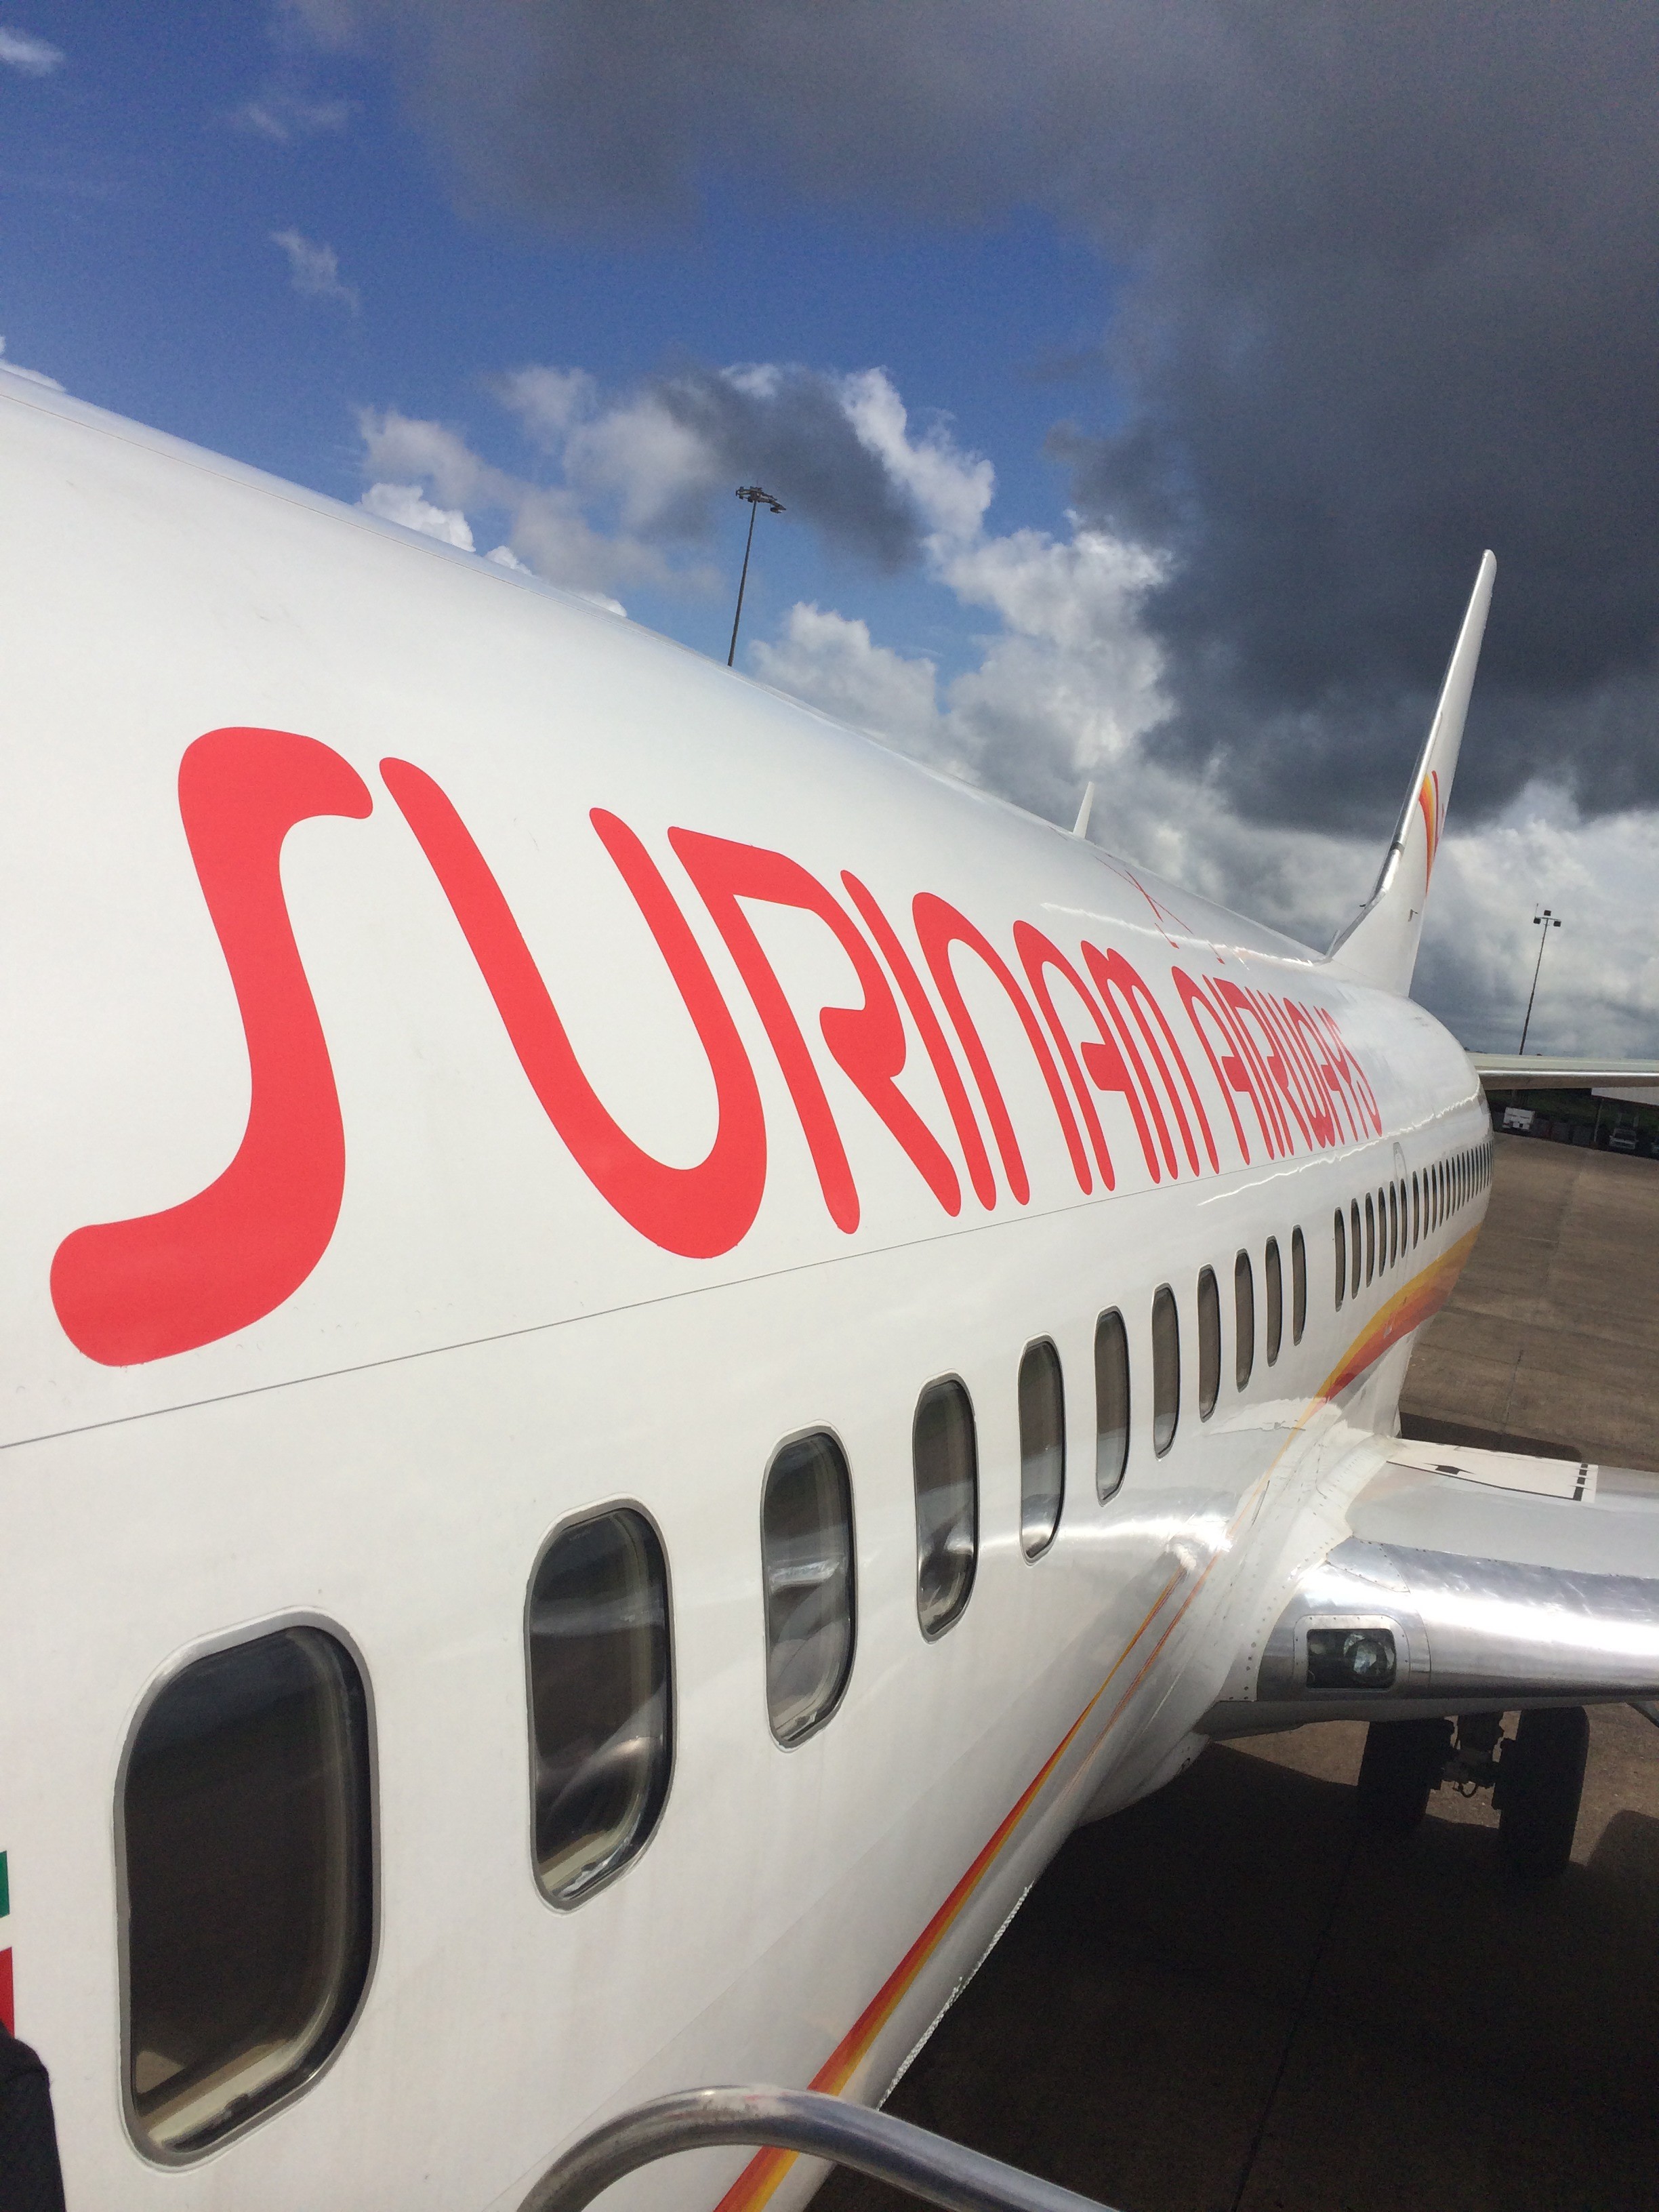 Arriving in Cayenne on Suriname Airways